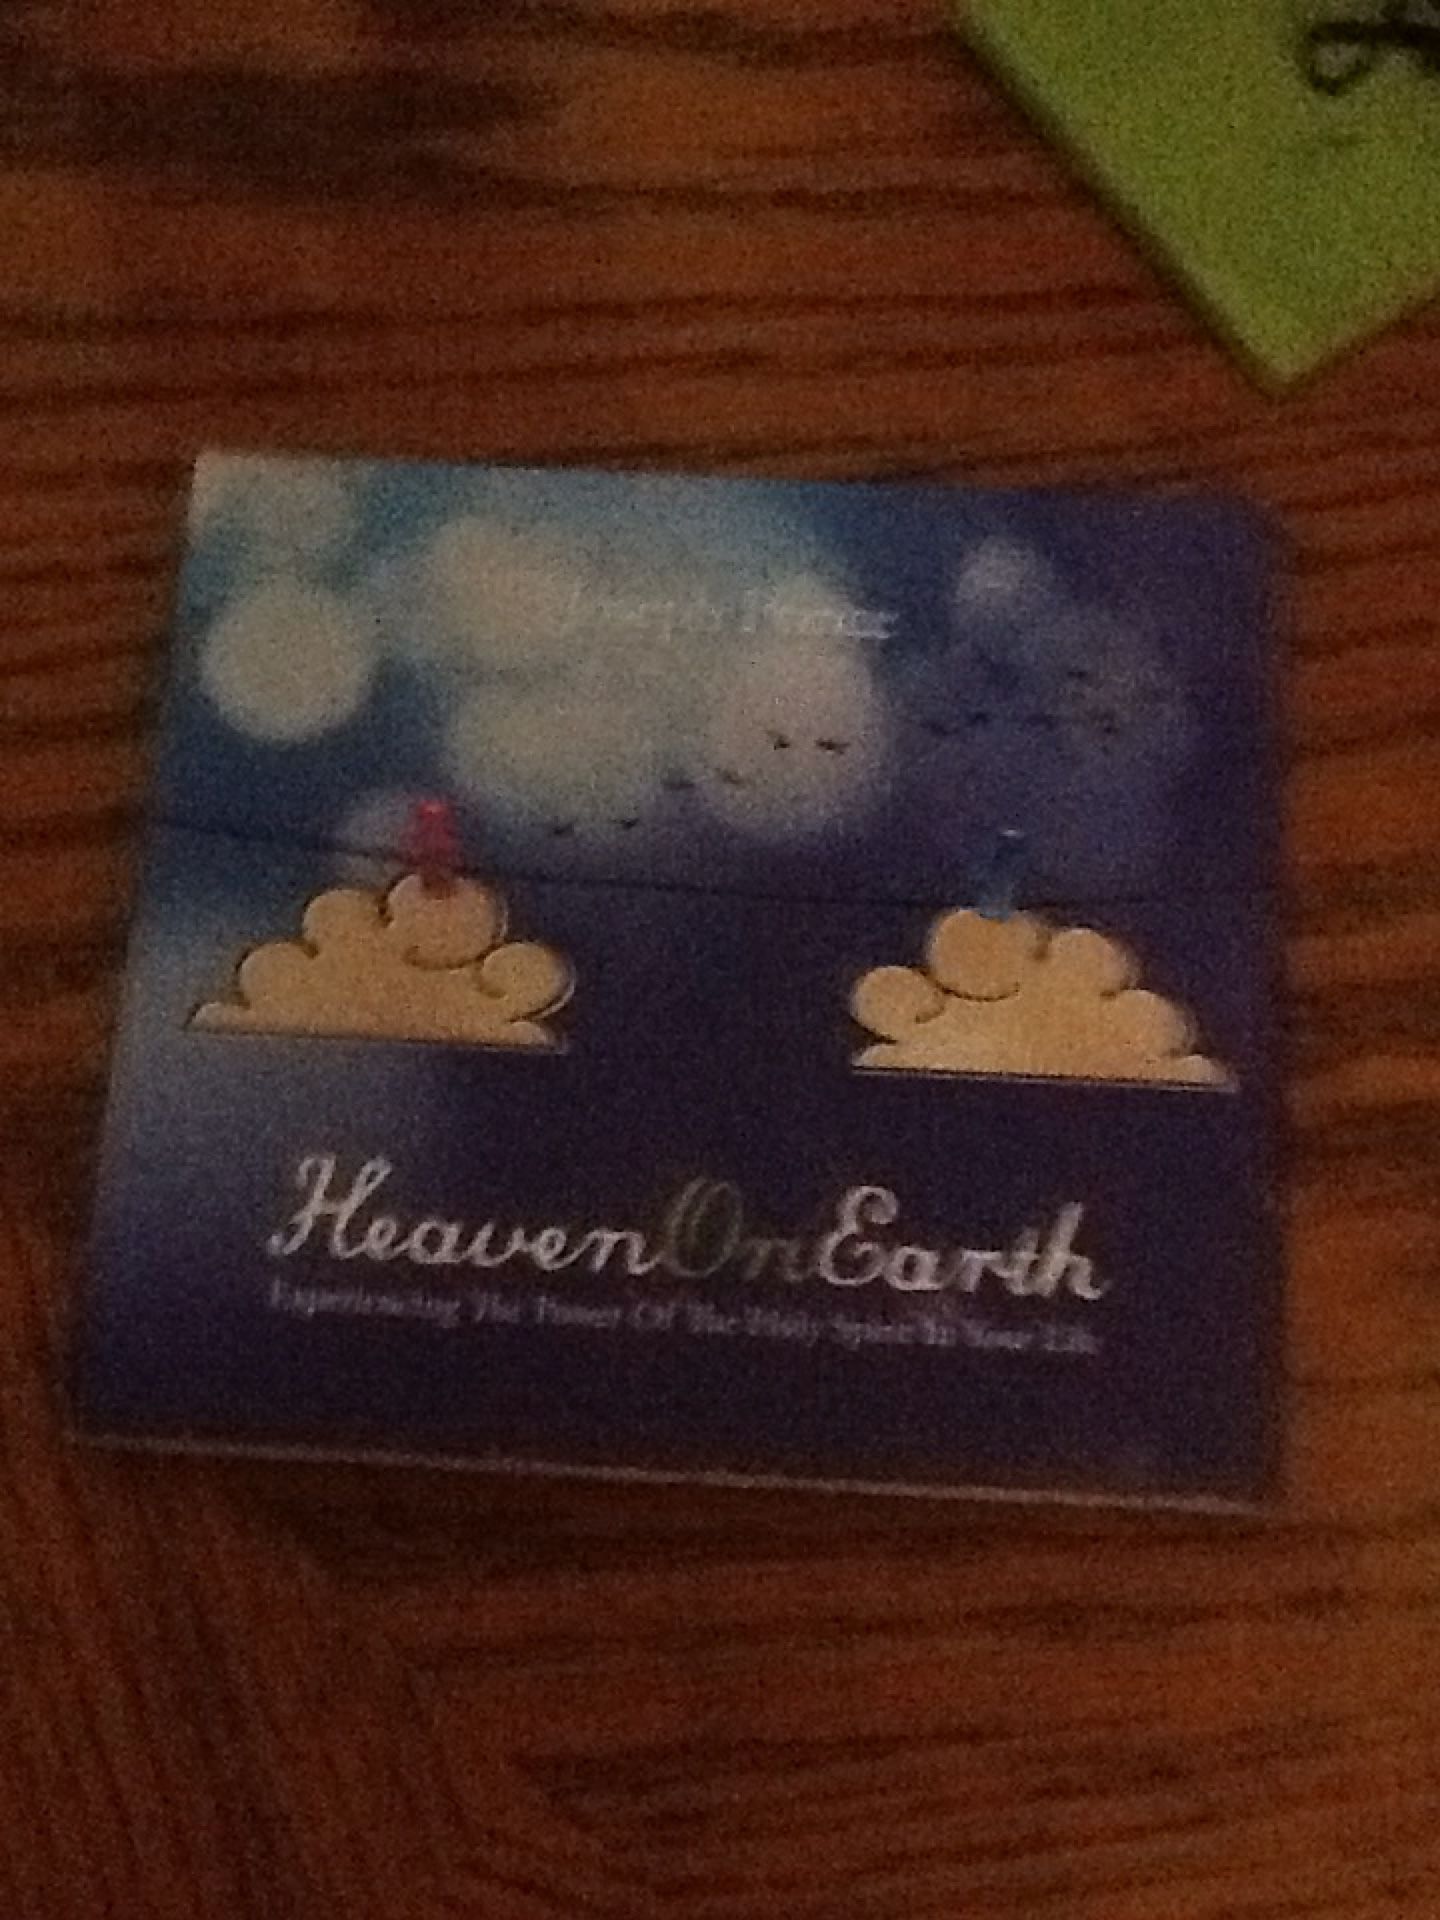 Heaven on earth by Joseph prince audio book